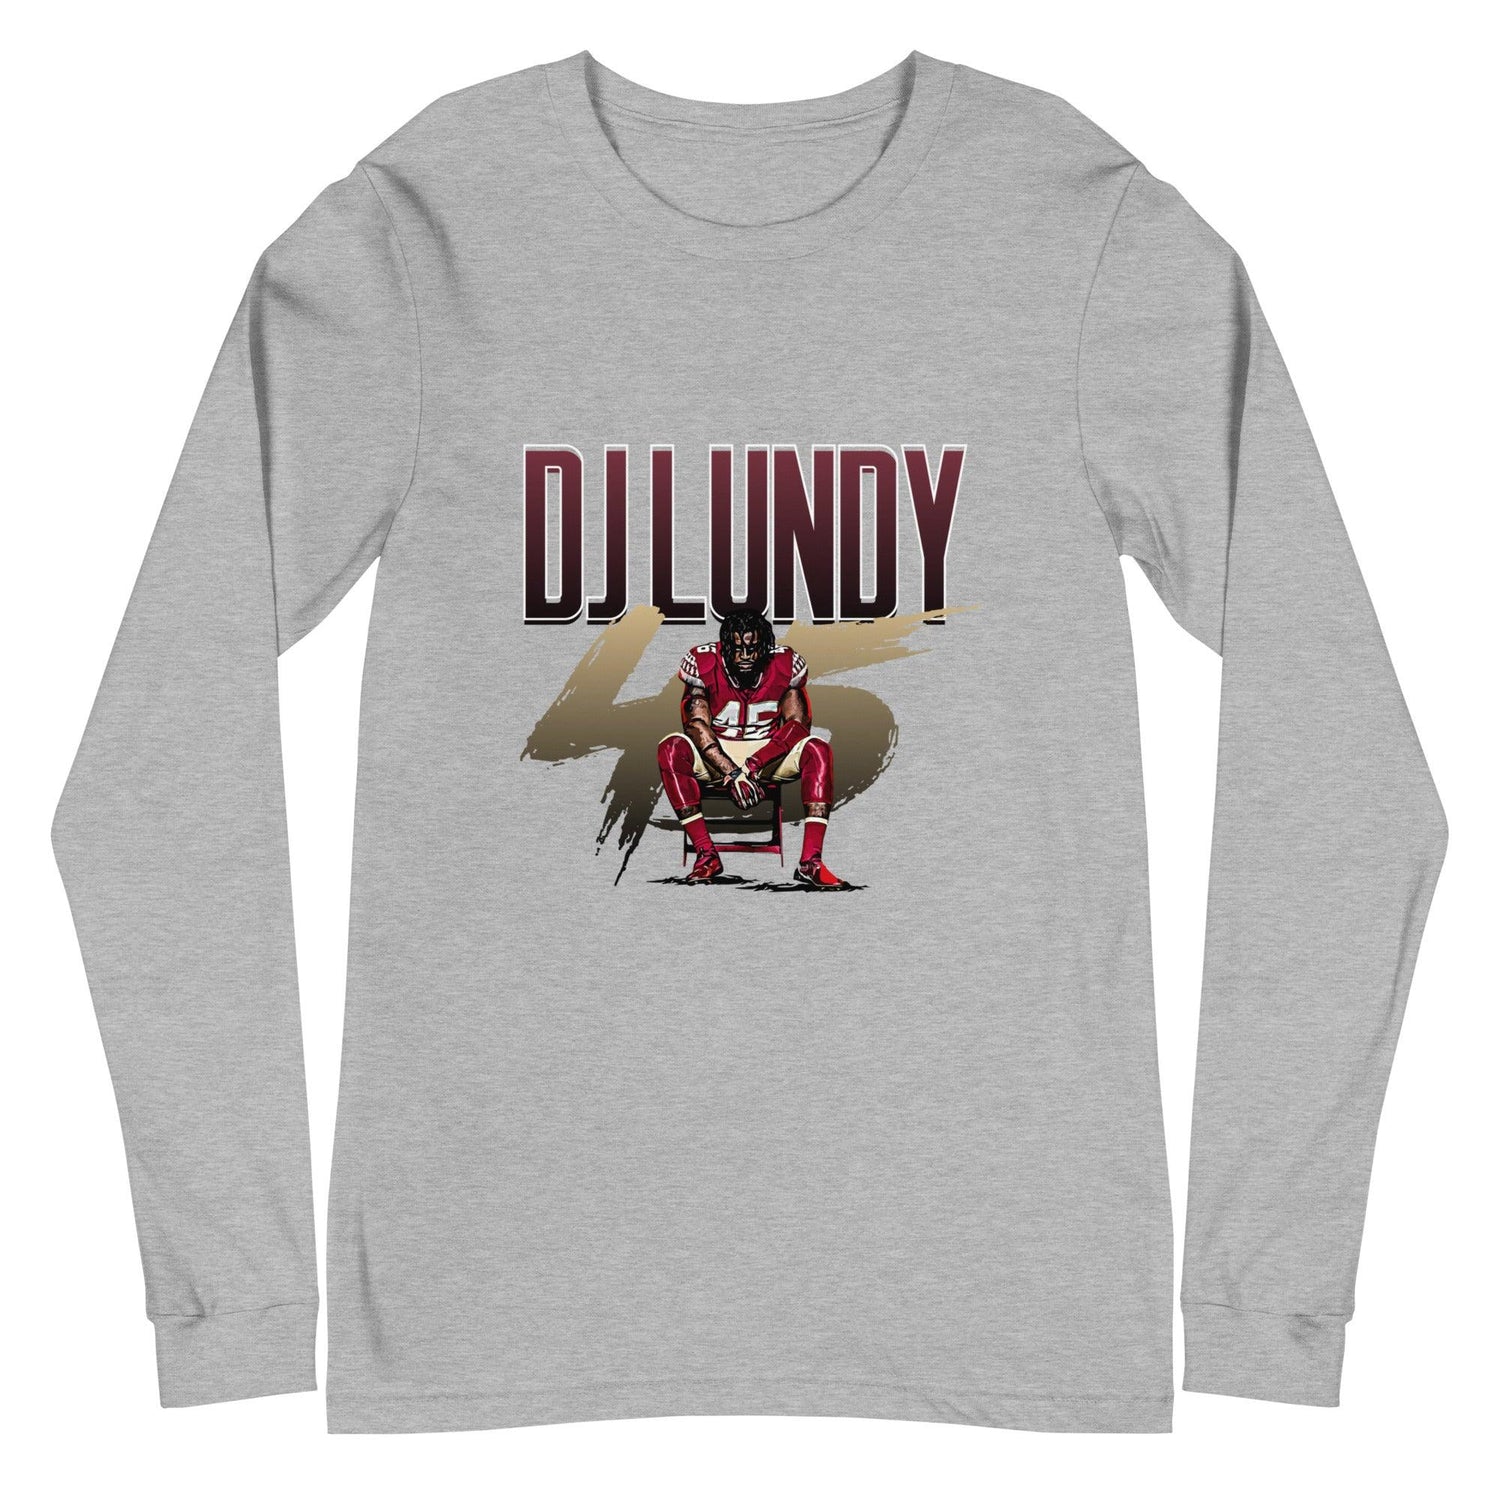 DJ Lundy "Gameday" Long Sleeve Tee - Fan Arch